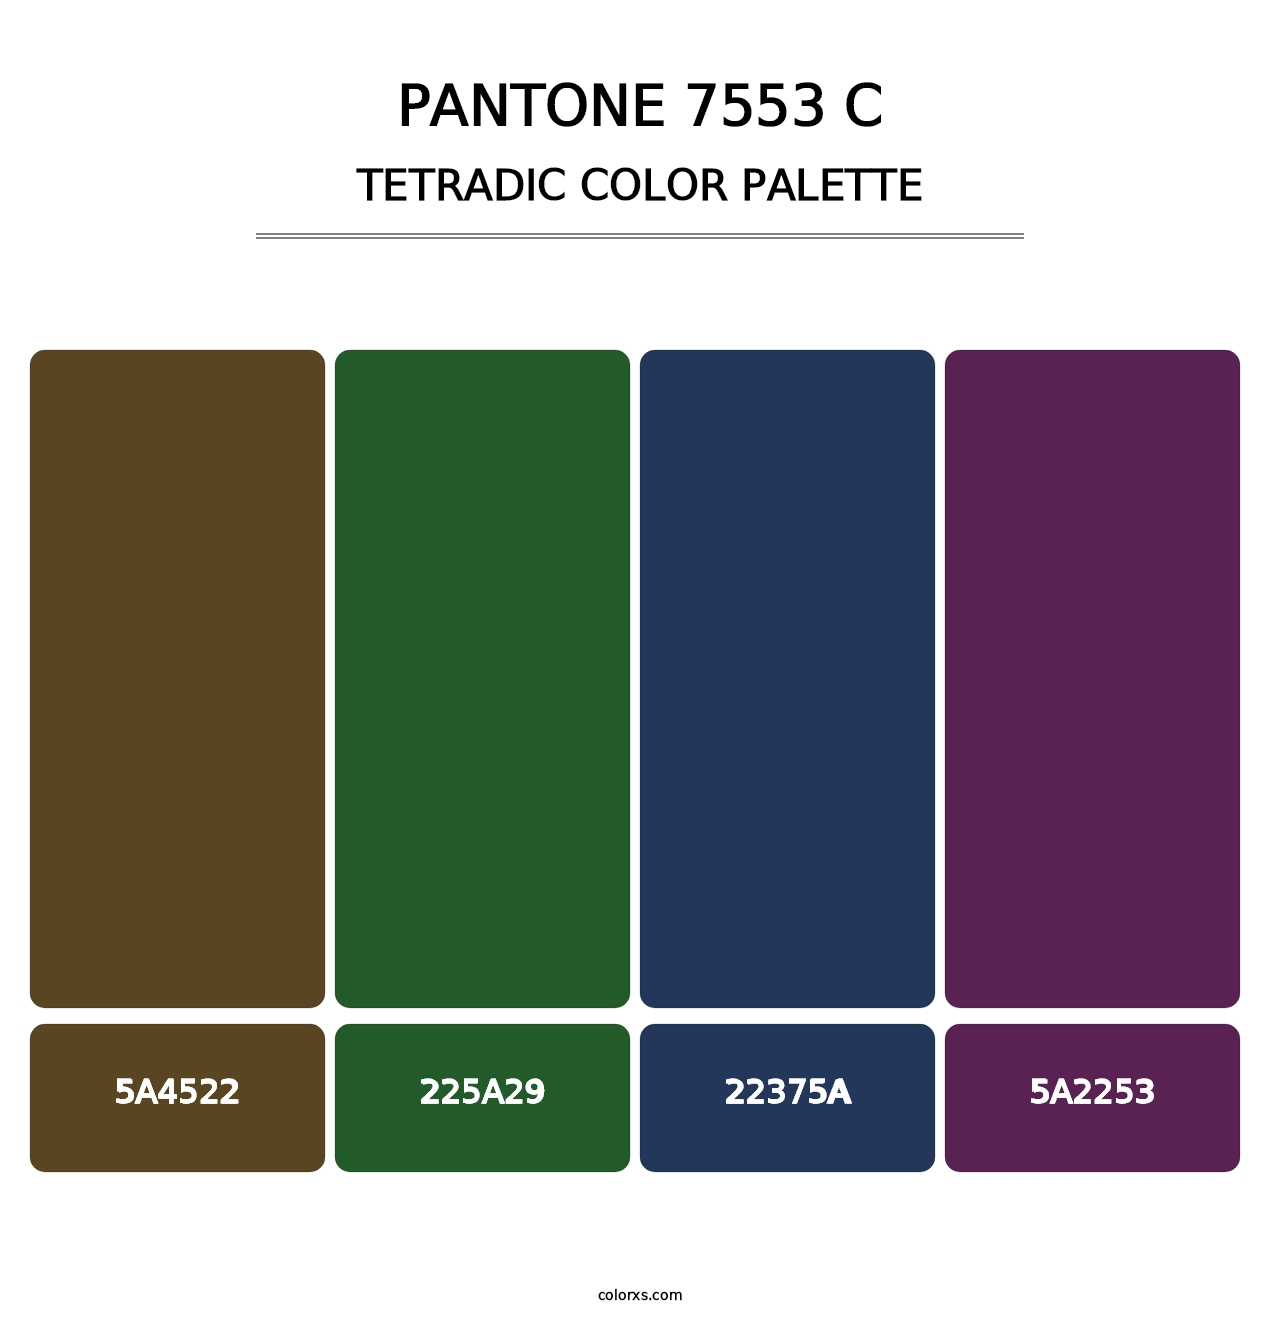 PANTONE 7553 C - Tetradic Color Palette